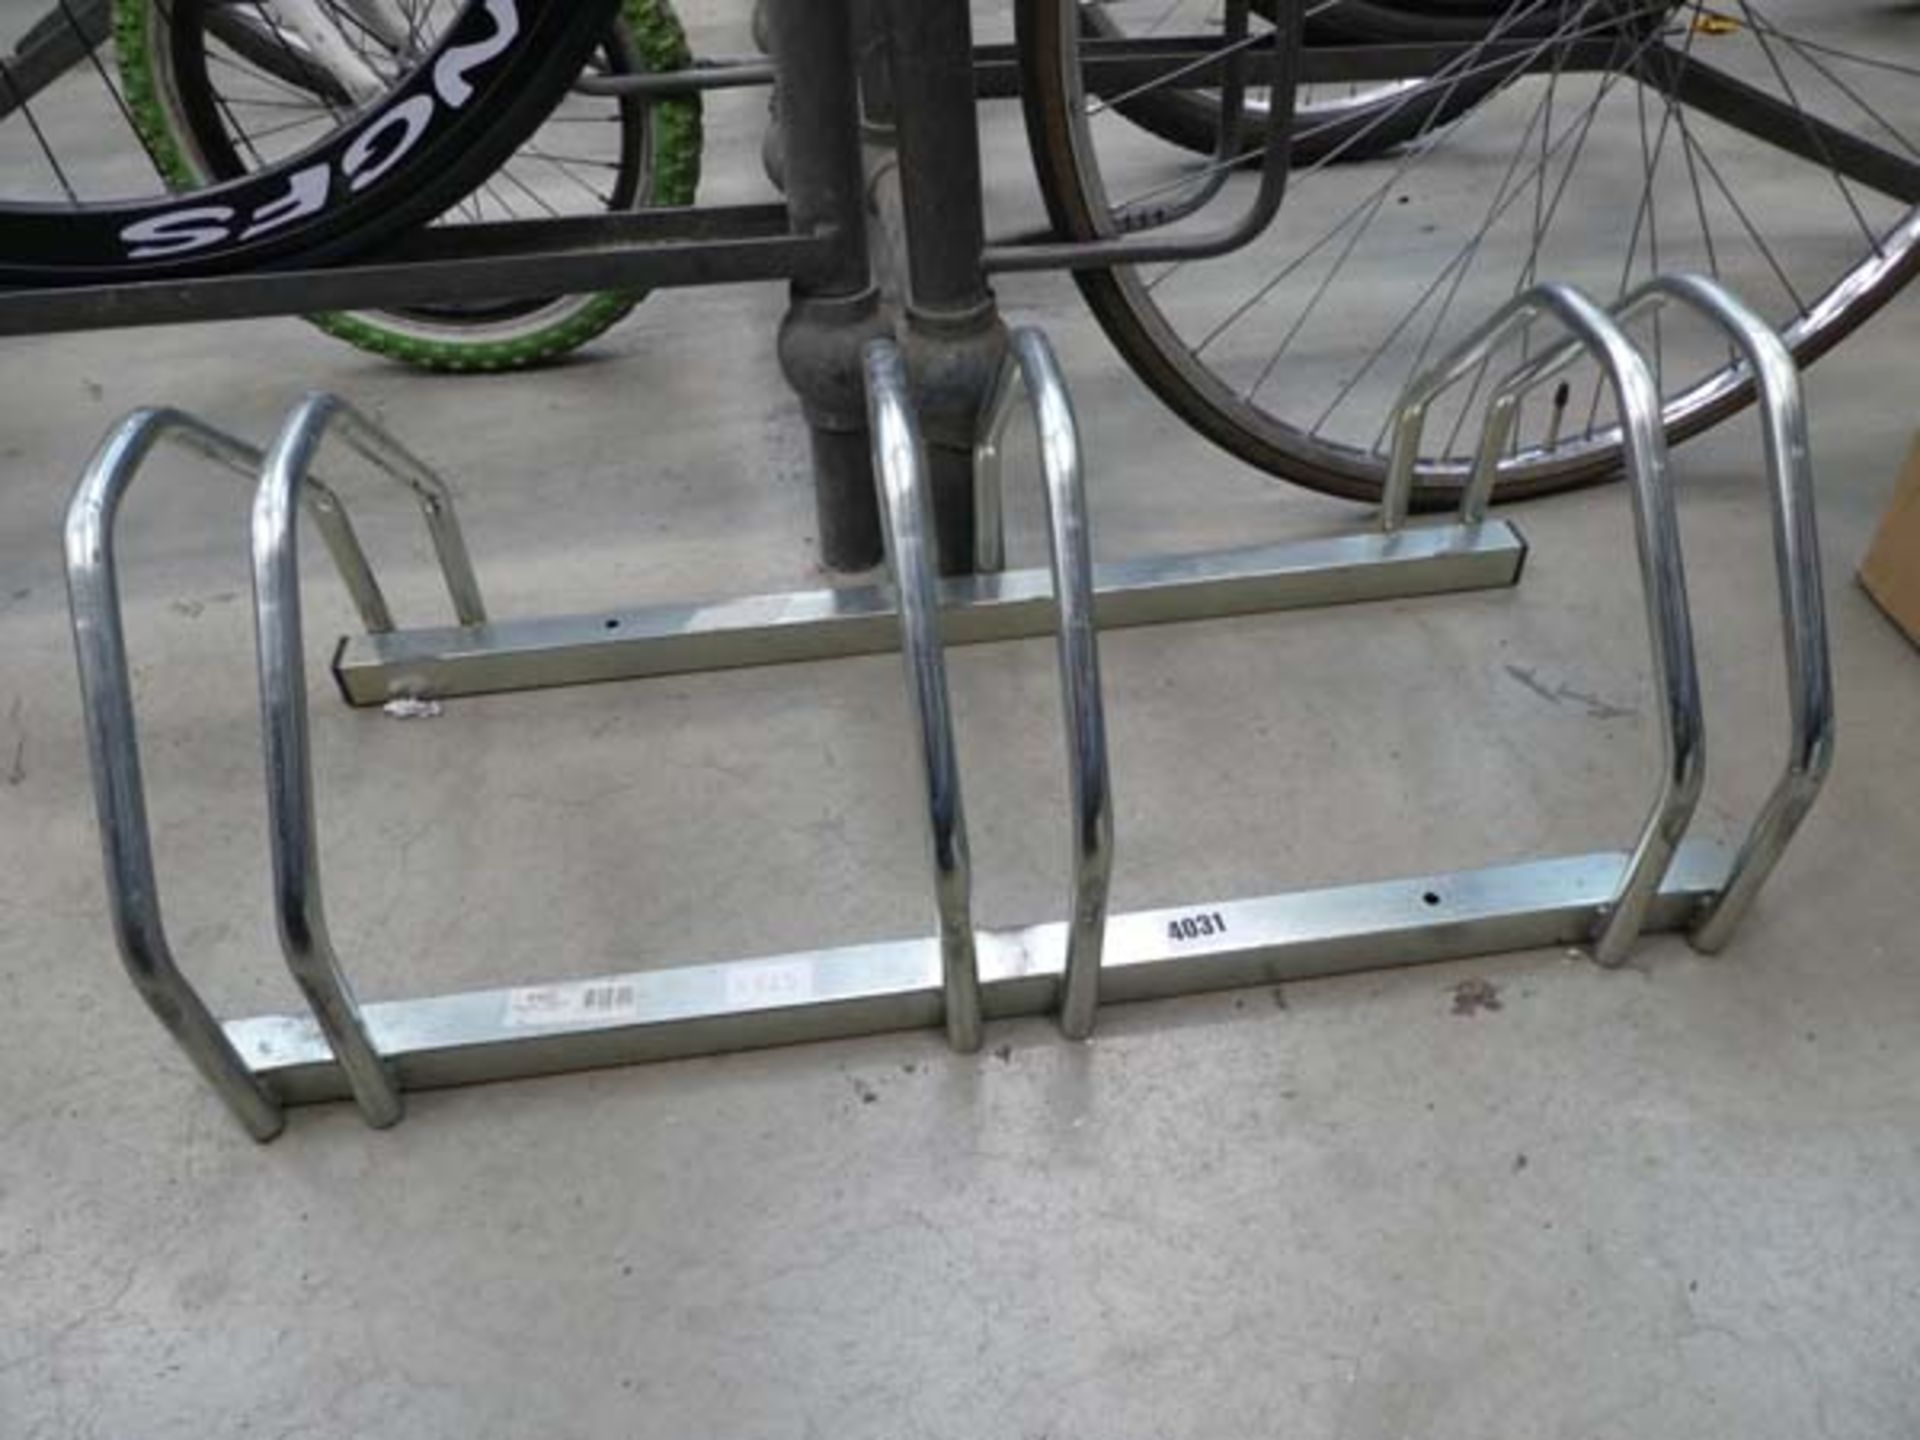 3 bike rack